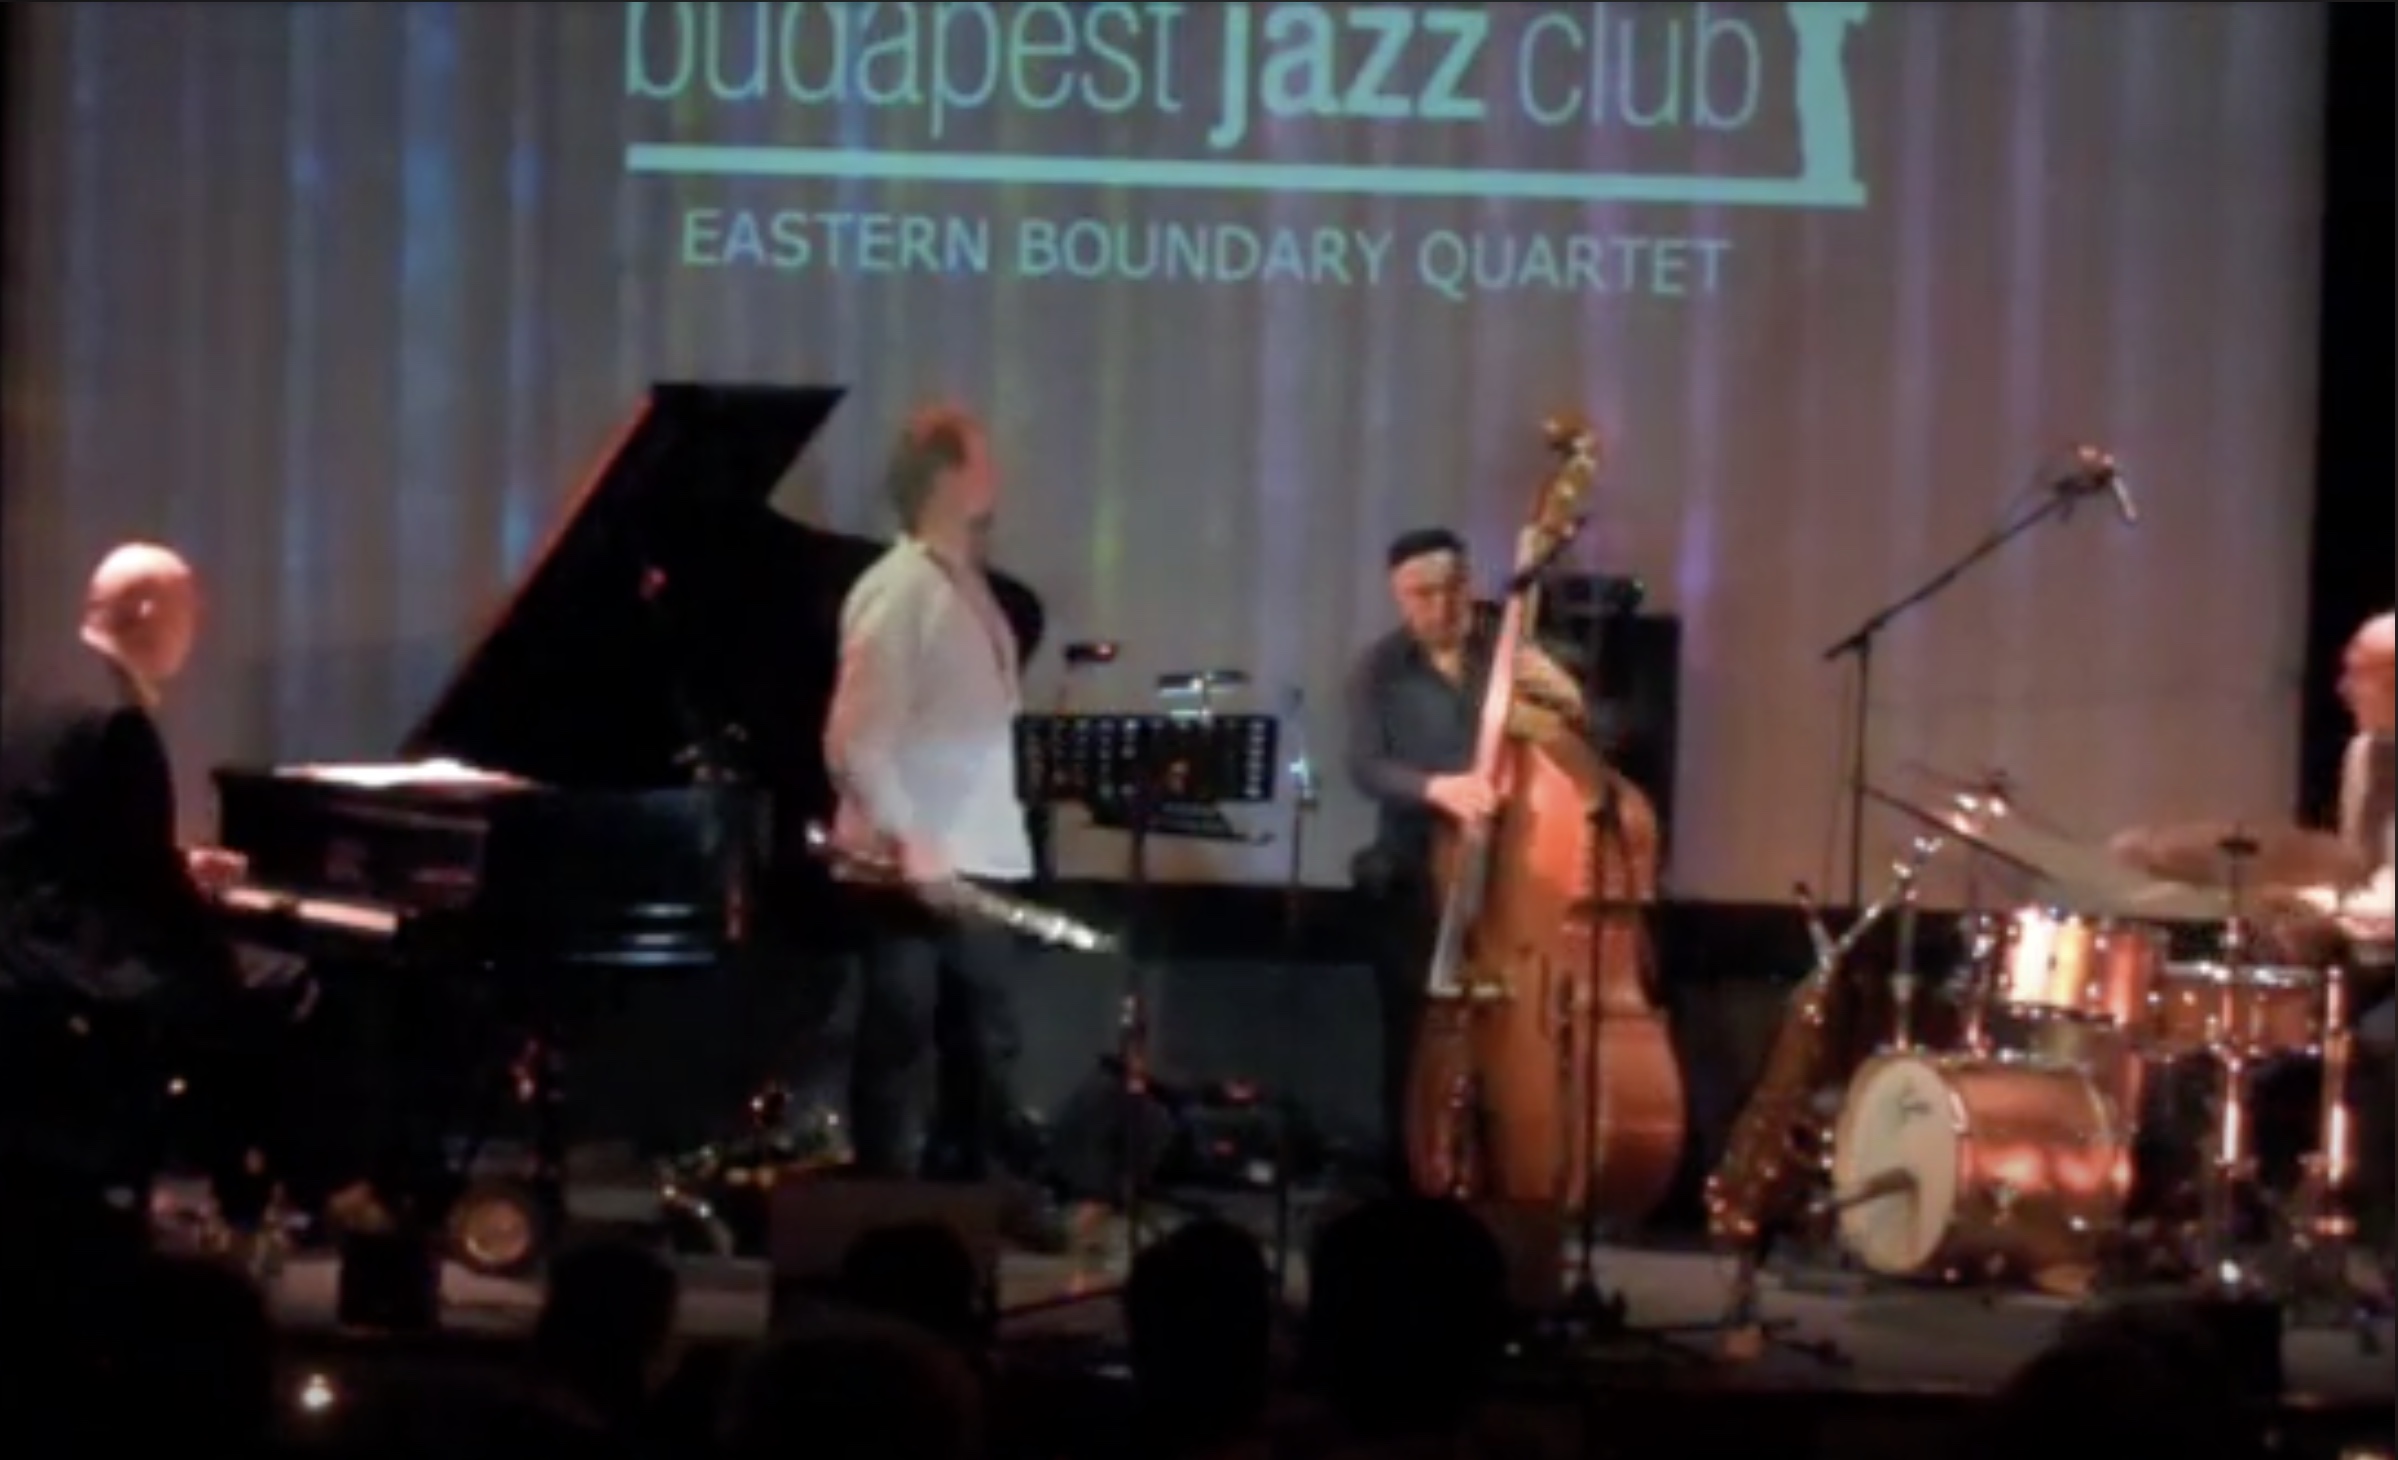 Eastern Boundary Quartet  jazz club budapest 2016